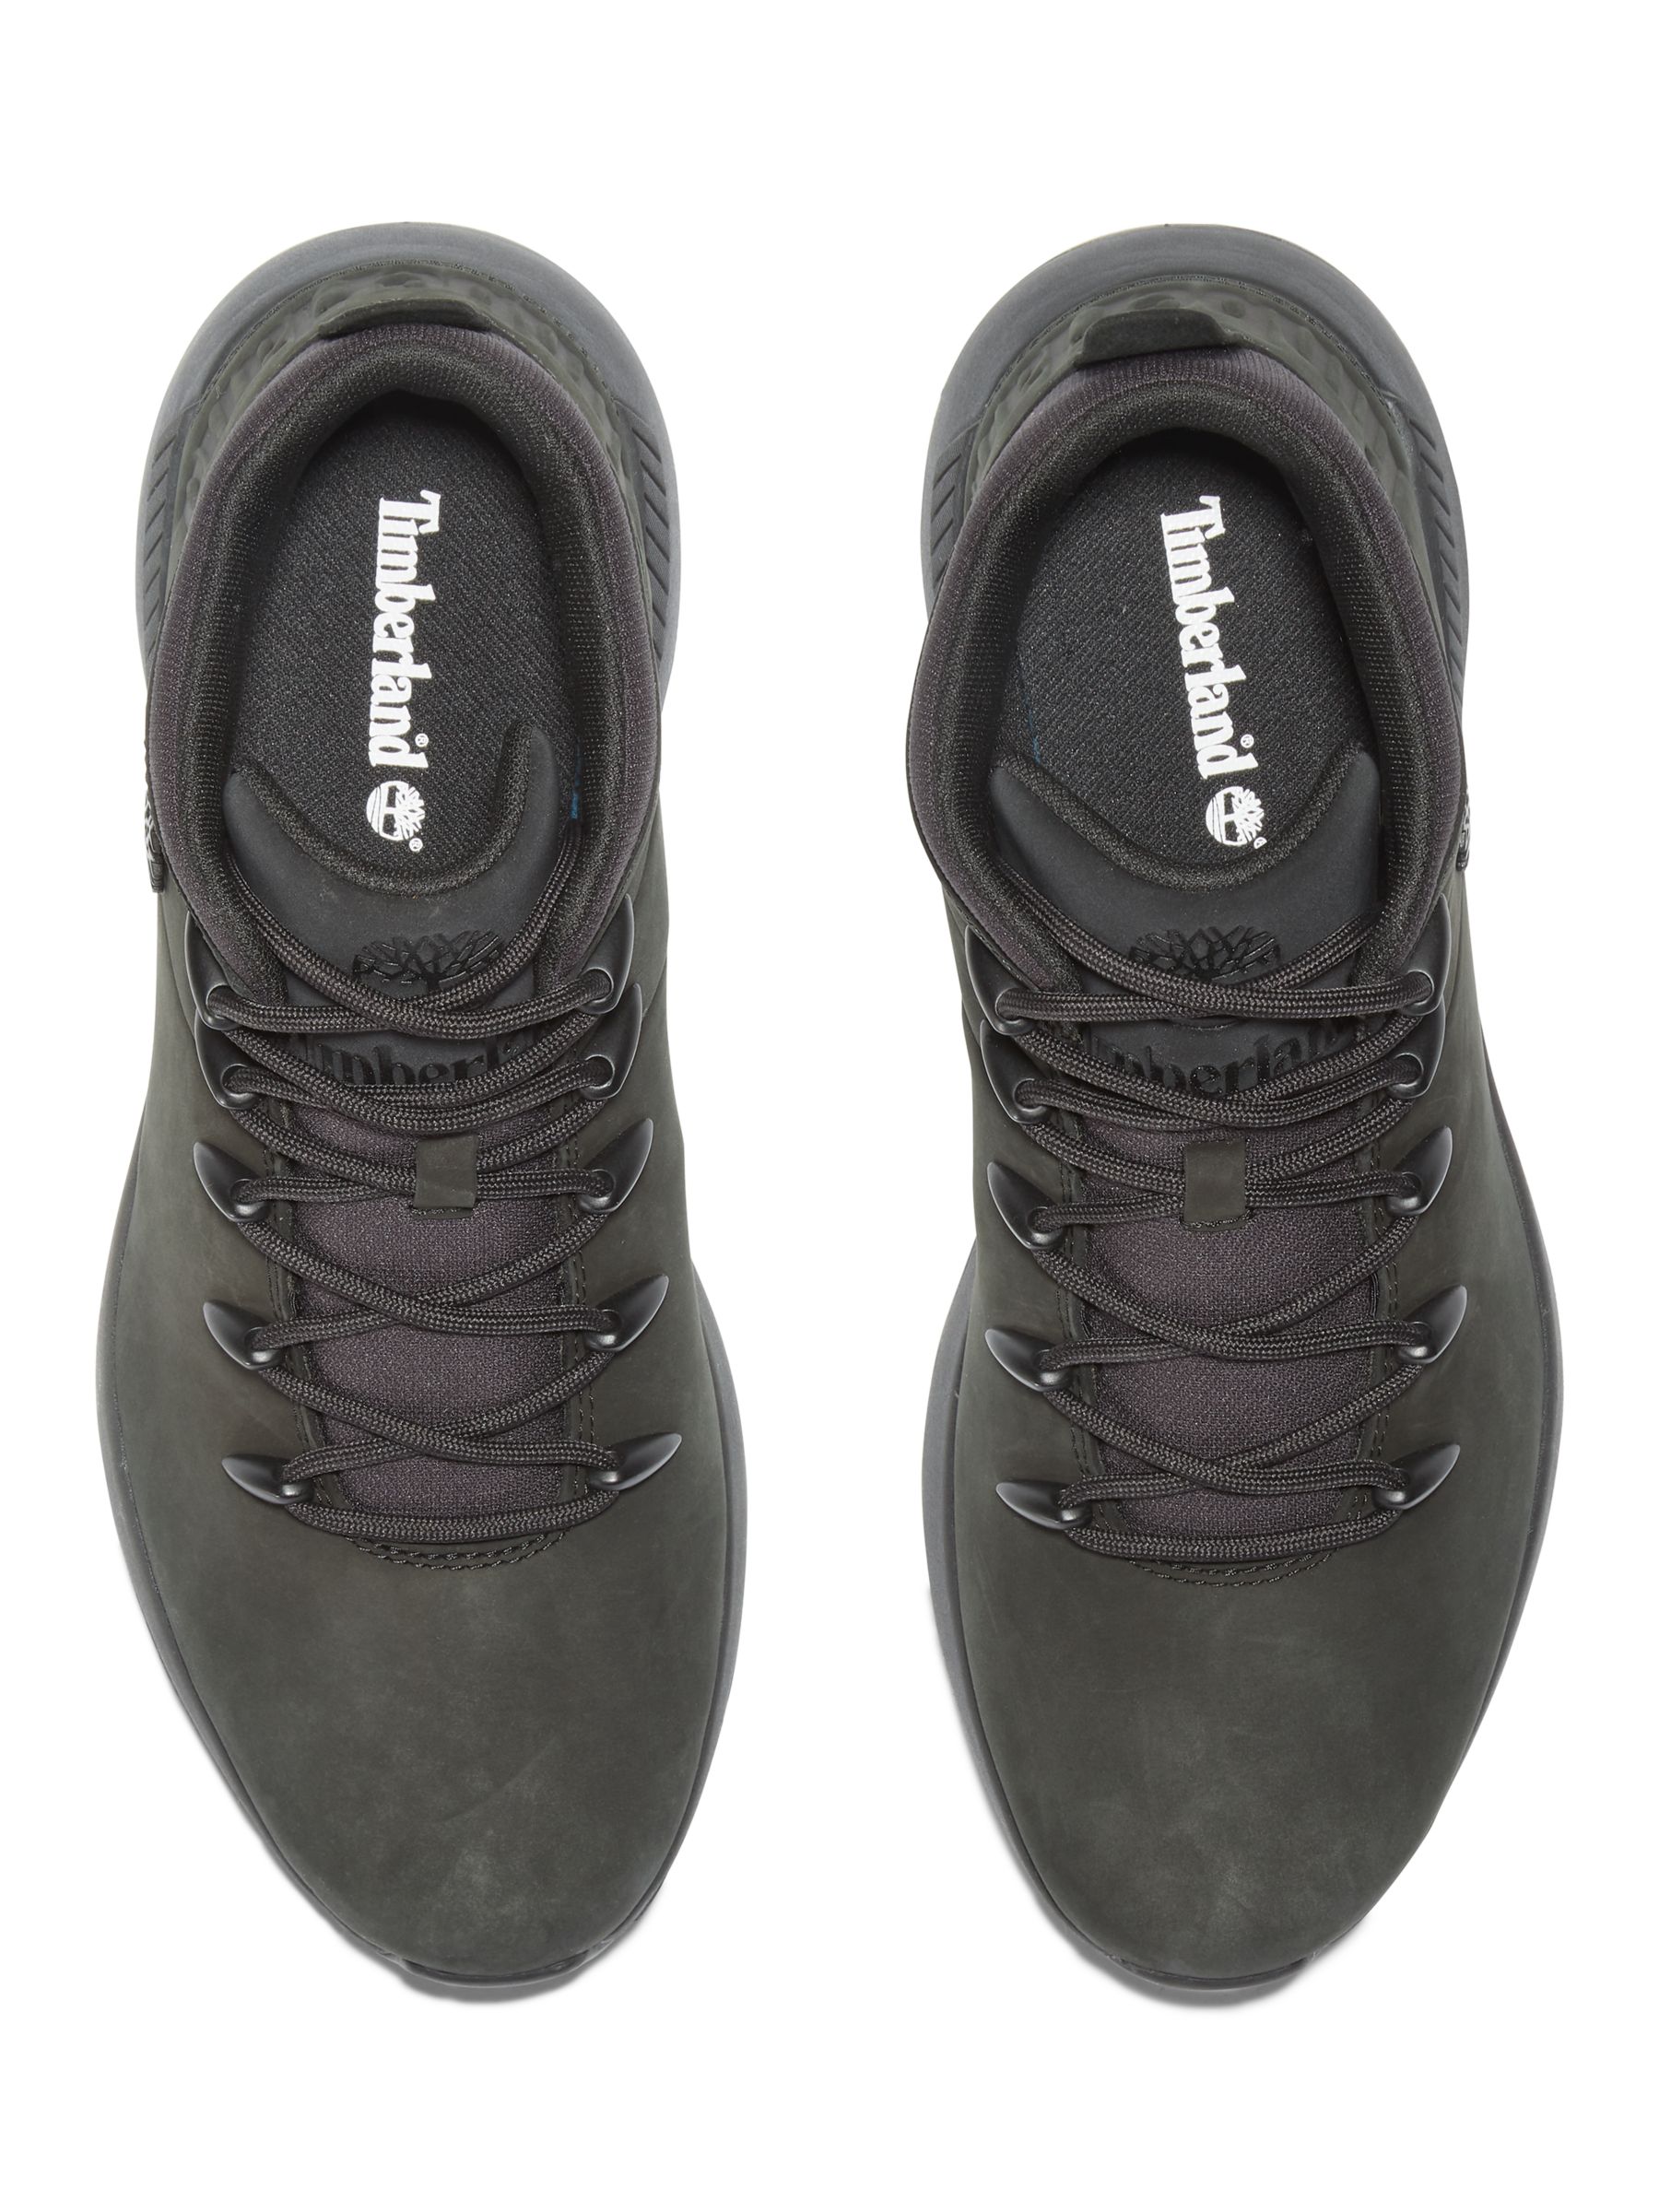 Timberland Sprint Trekker Leather Boots, Black, 9